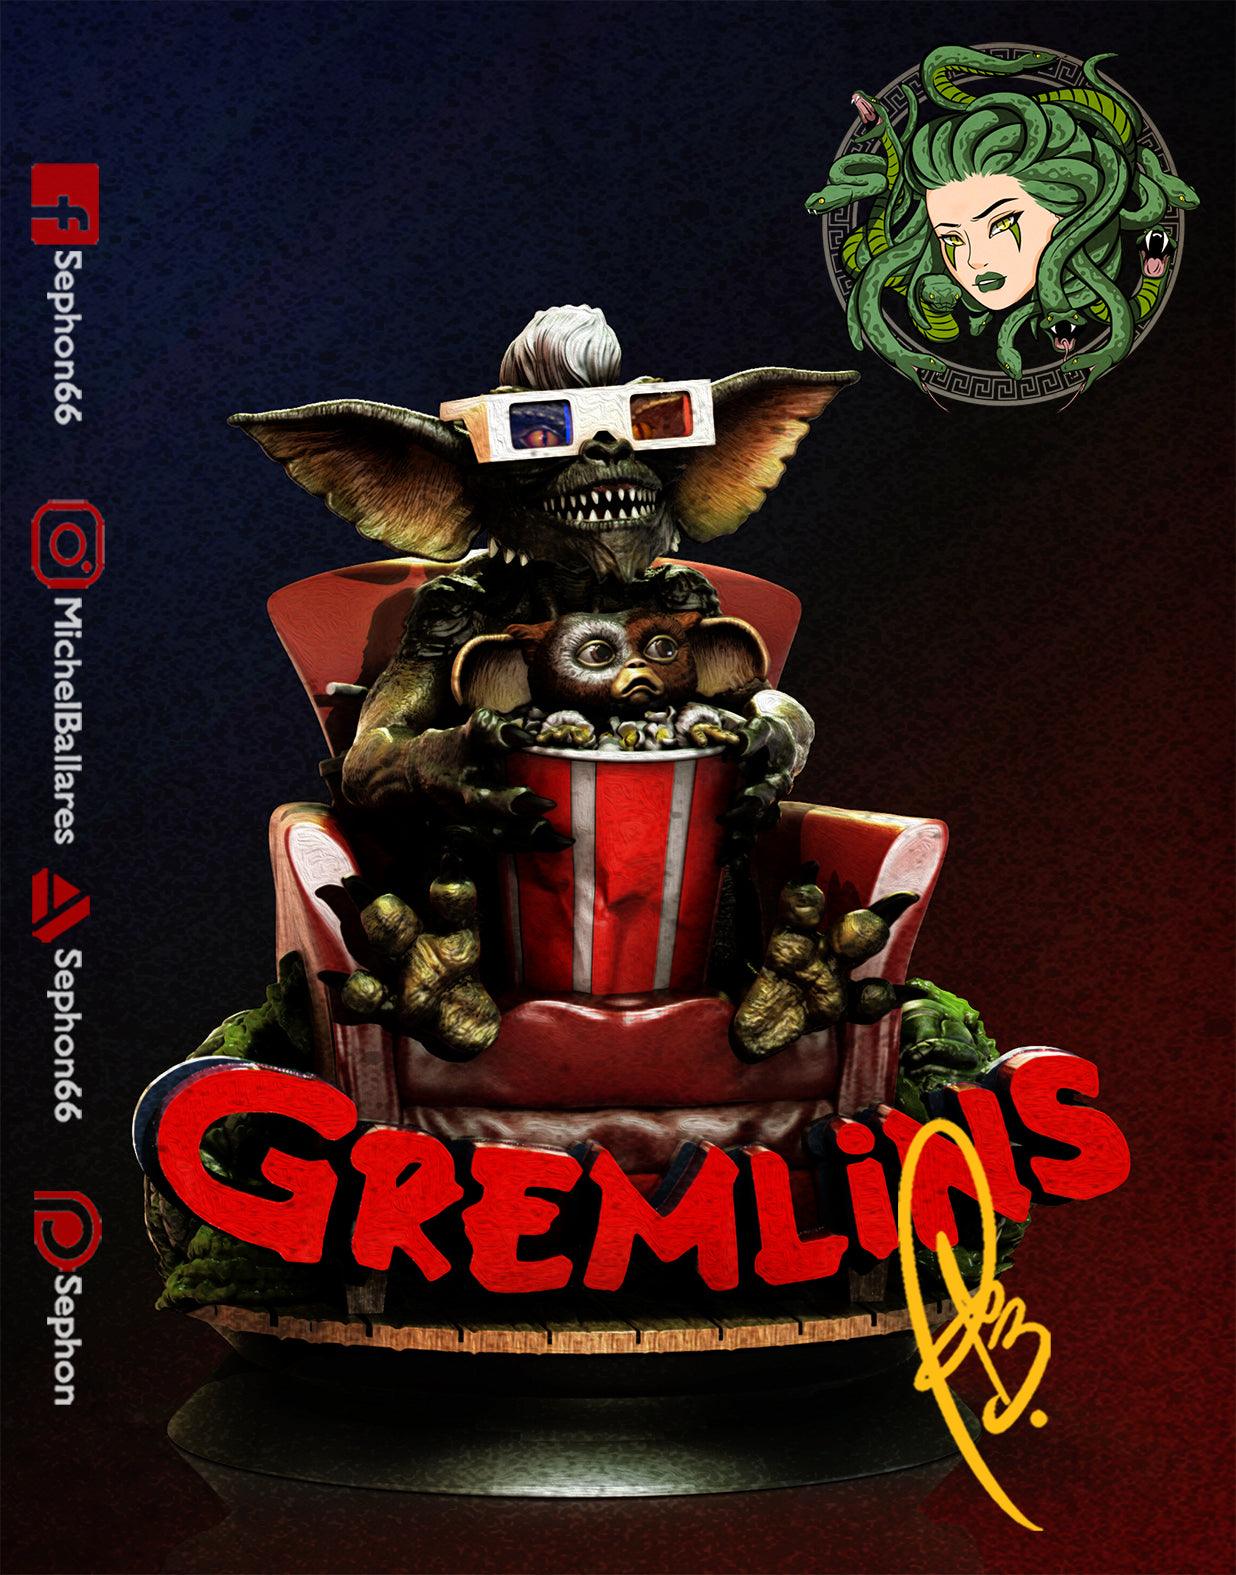 Gremlins - TODO ROL SPAIN 